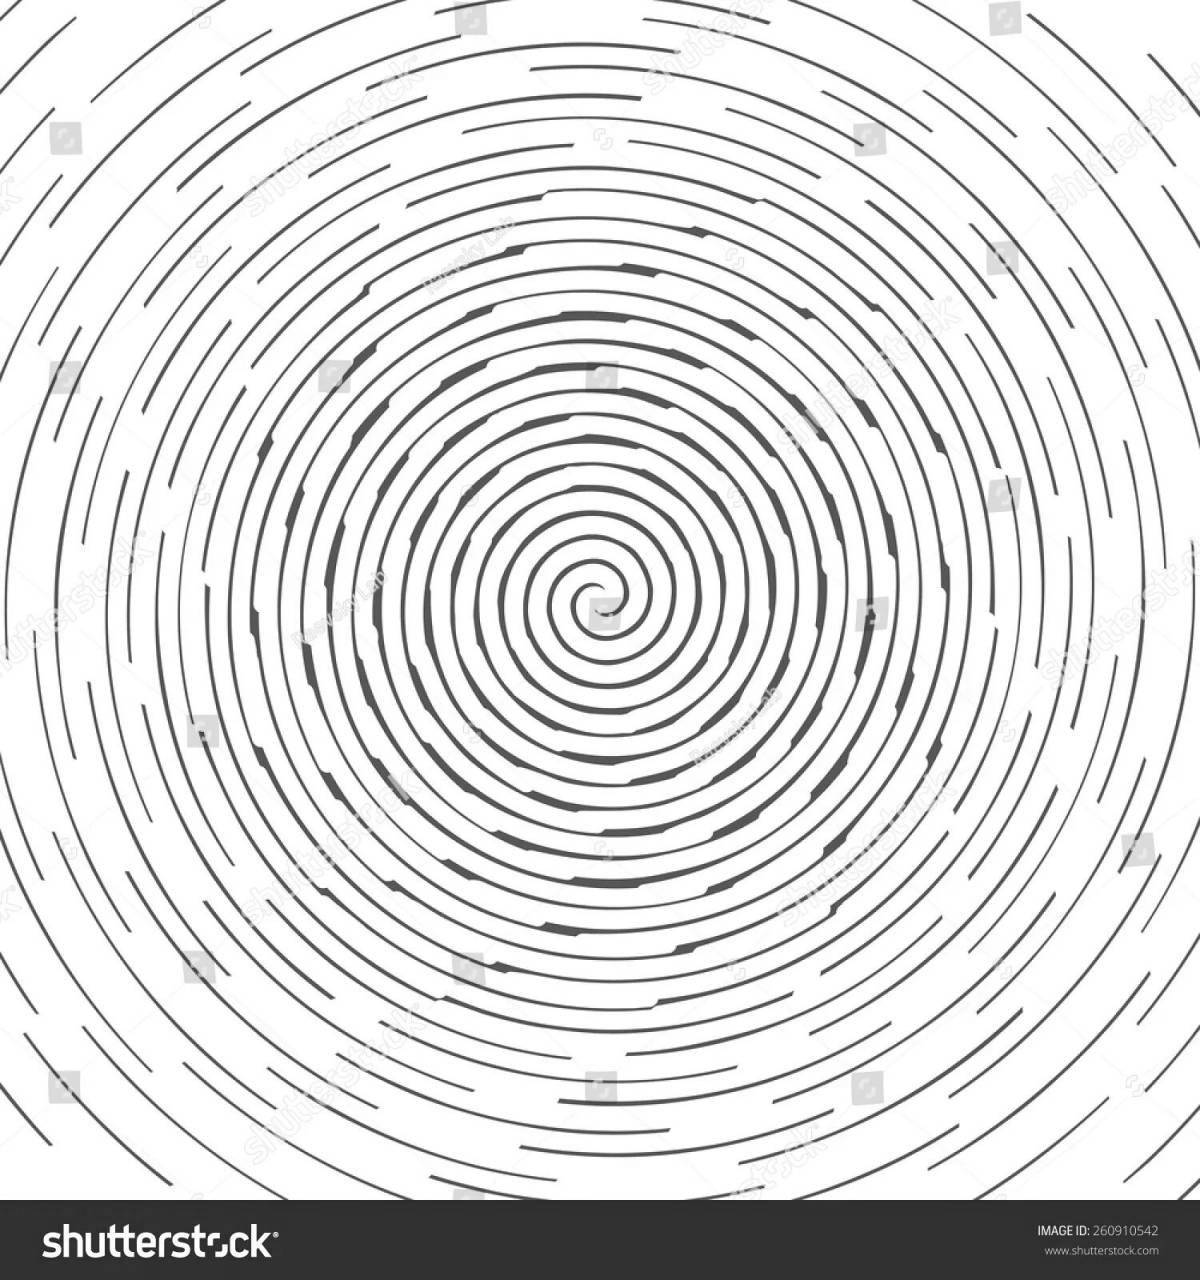 Magic spiral drawing